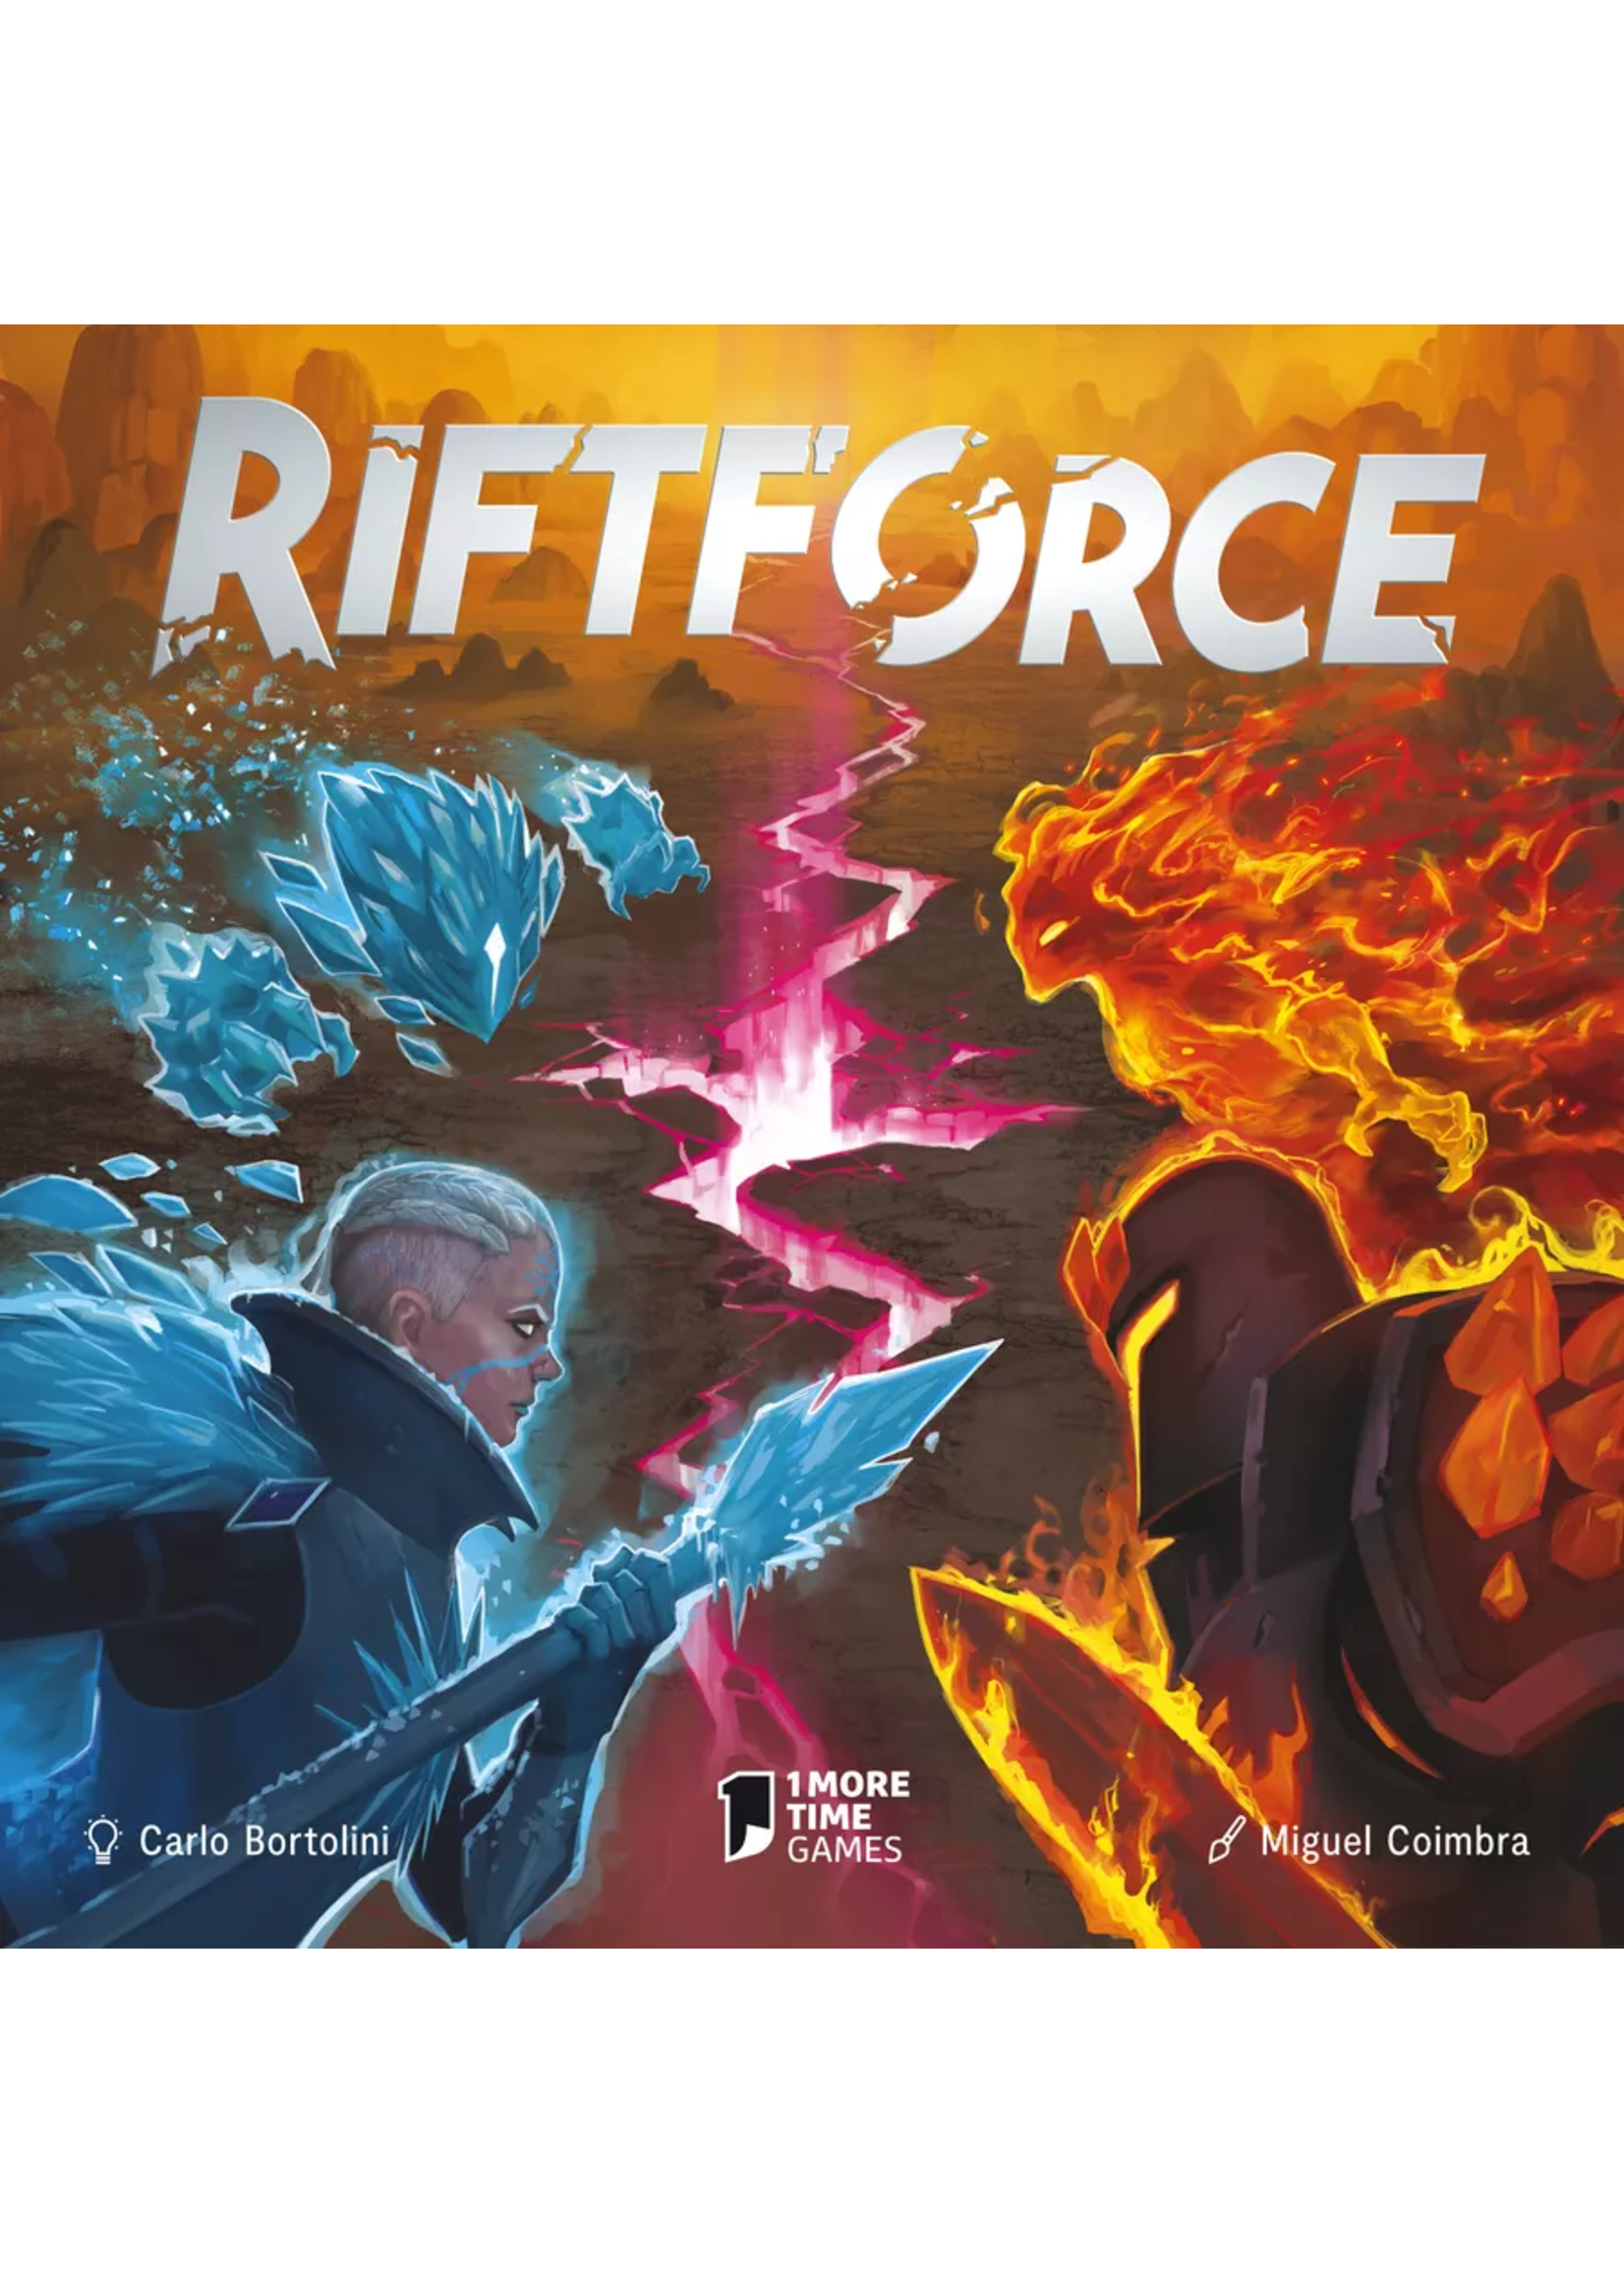 Capstone Games Riftforce